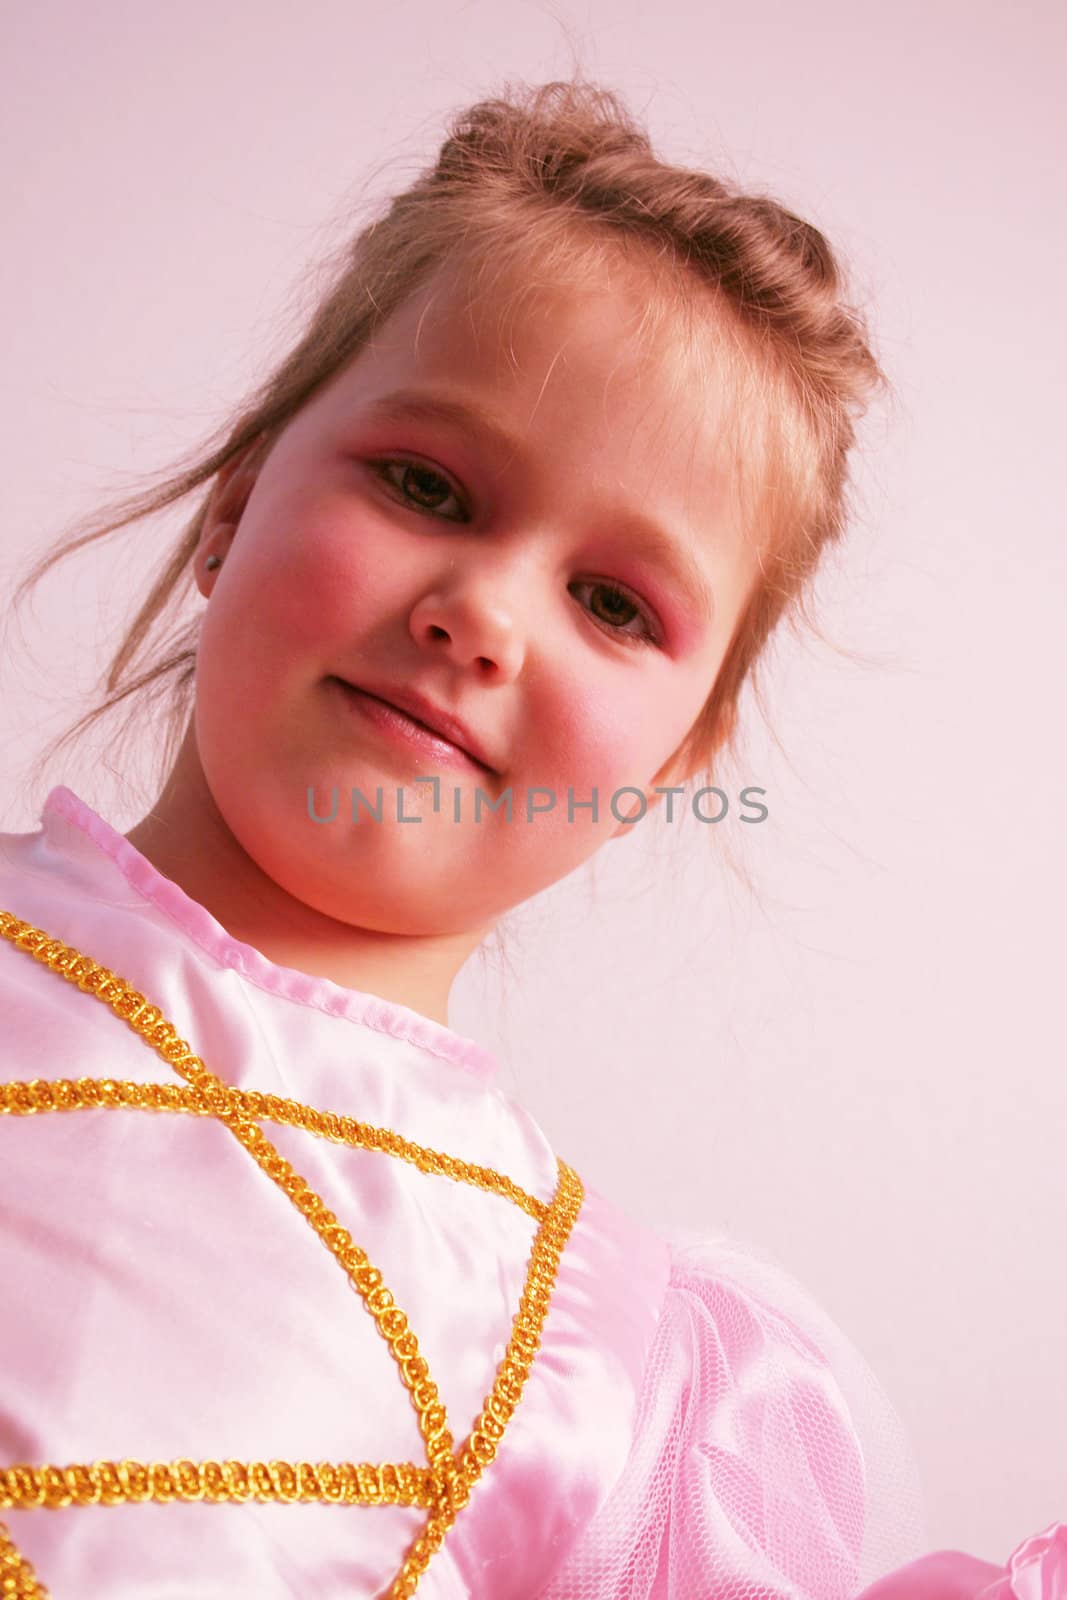 nice portrait picture of a little princess